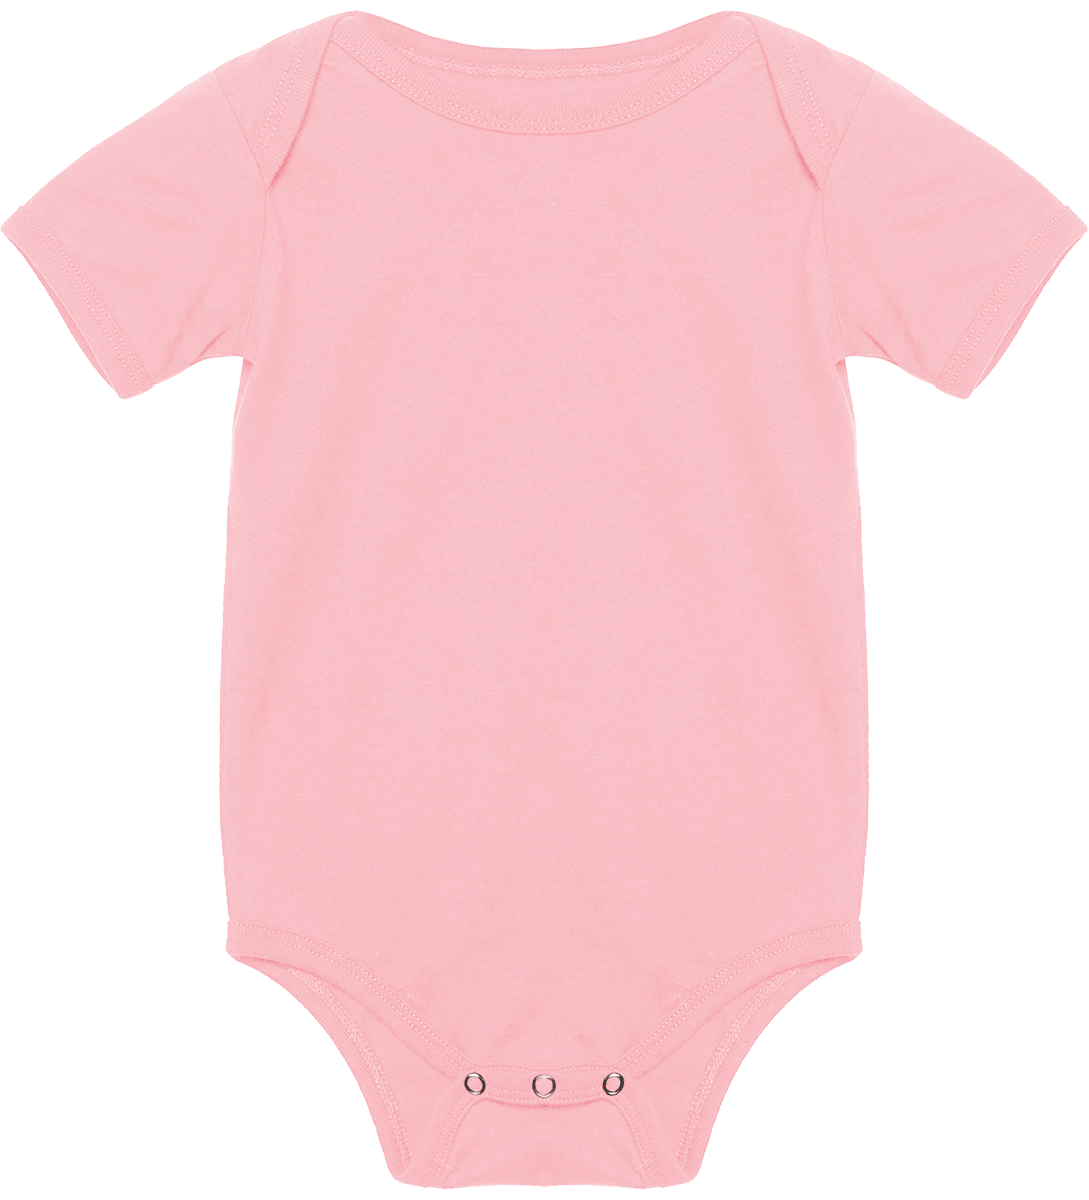 Customizable Short Sleeve Baby Onesie Pink